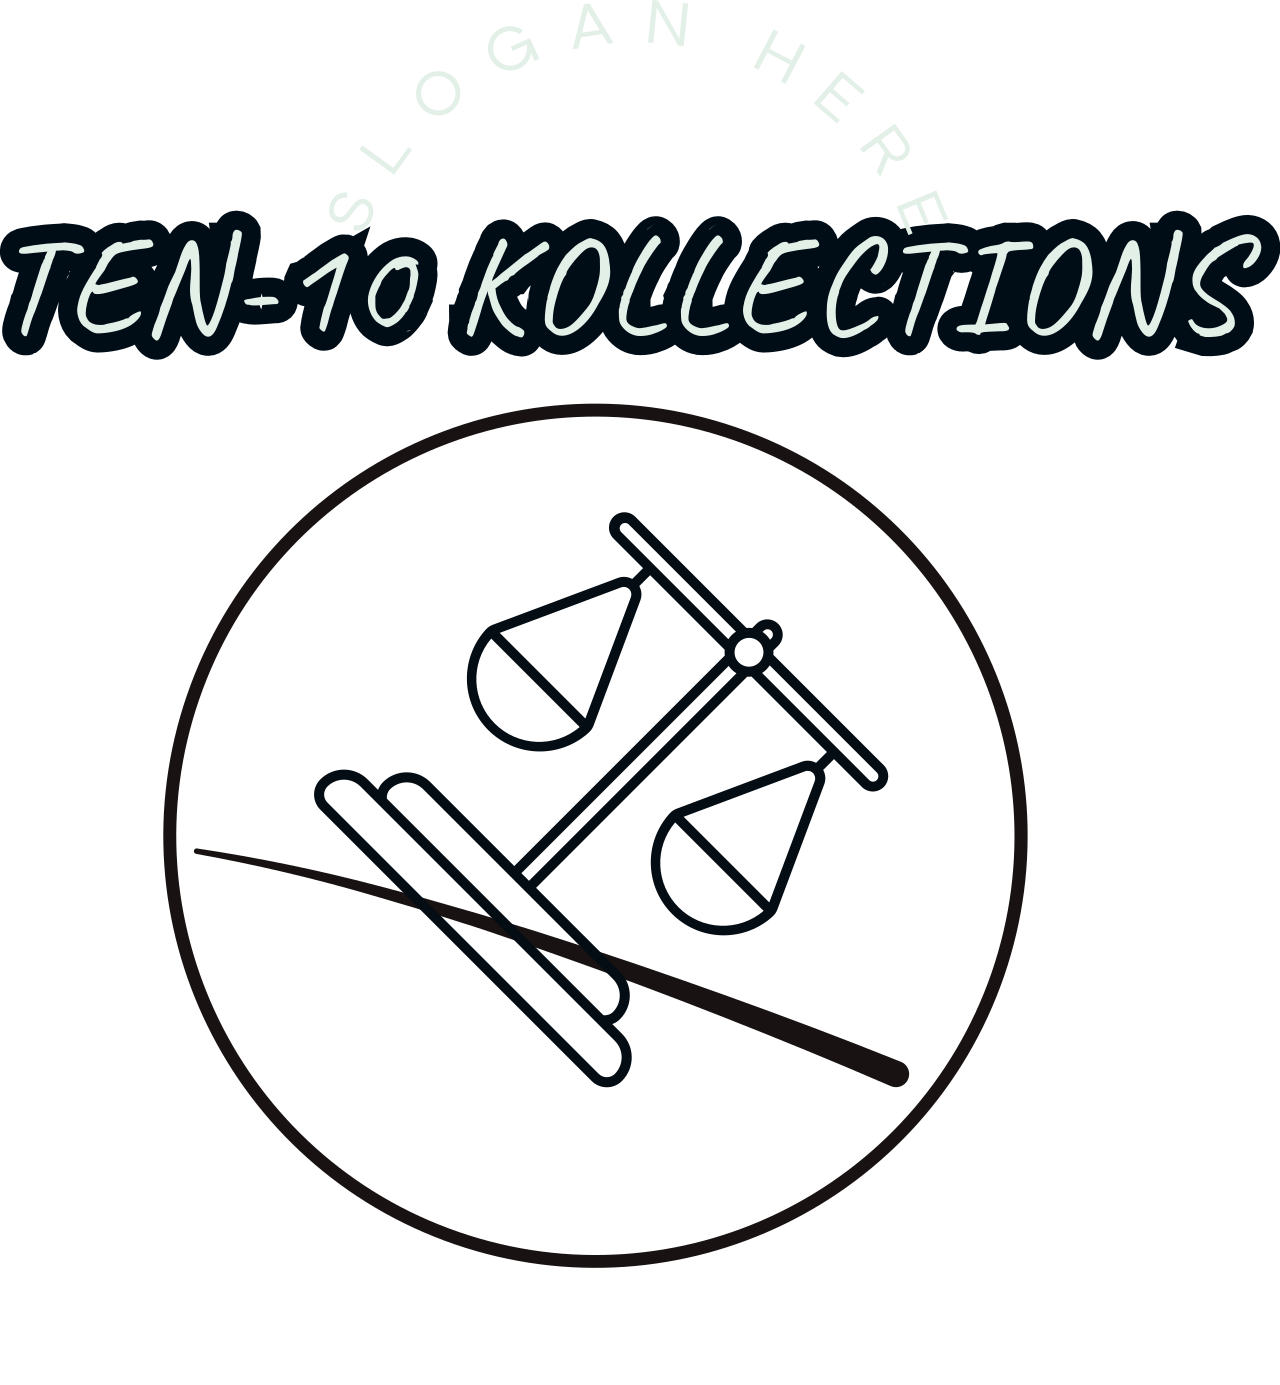 TEN-10 Kollections 's logo